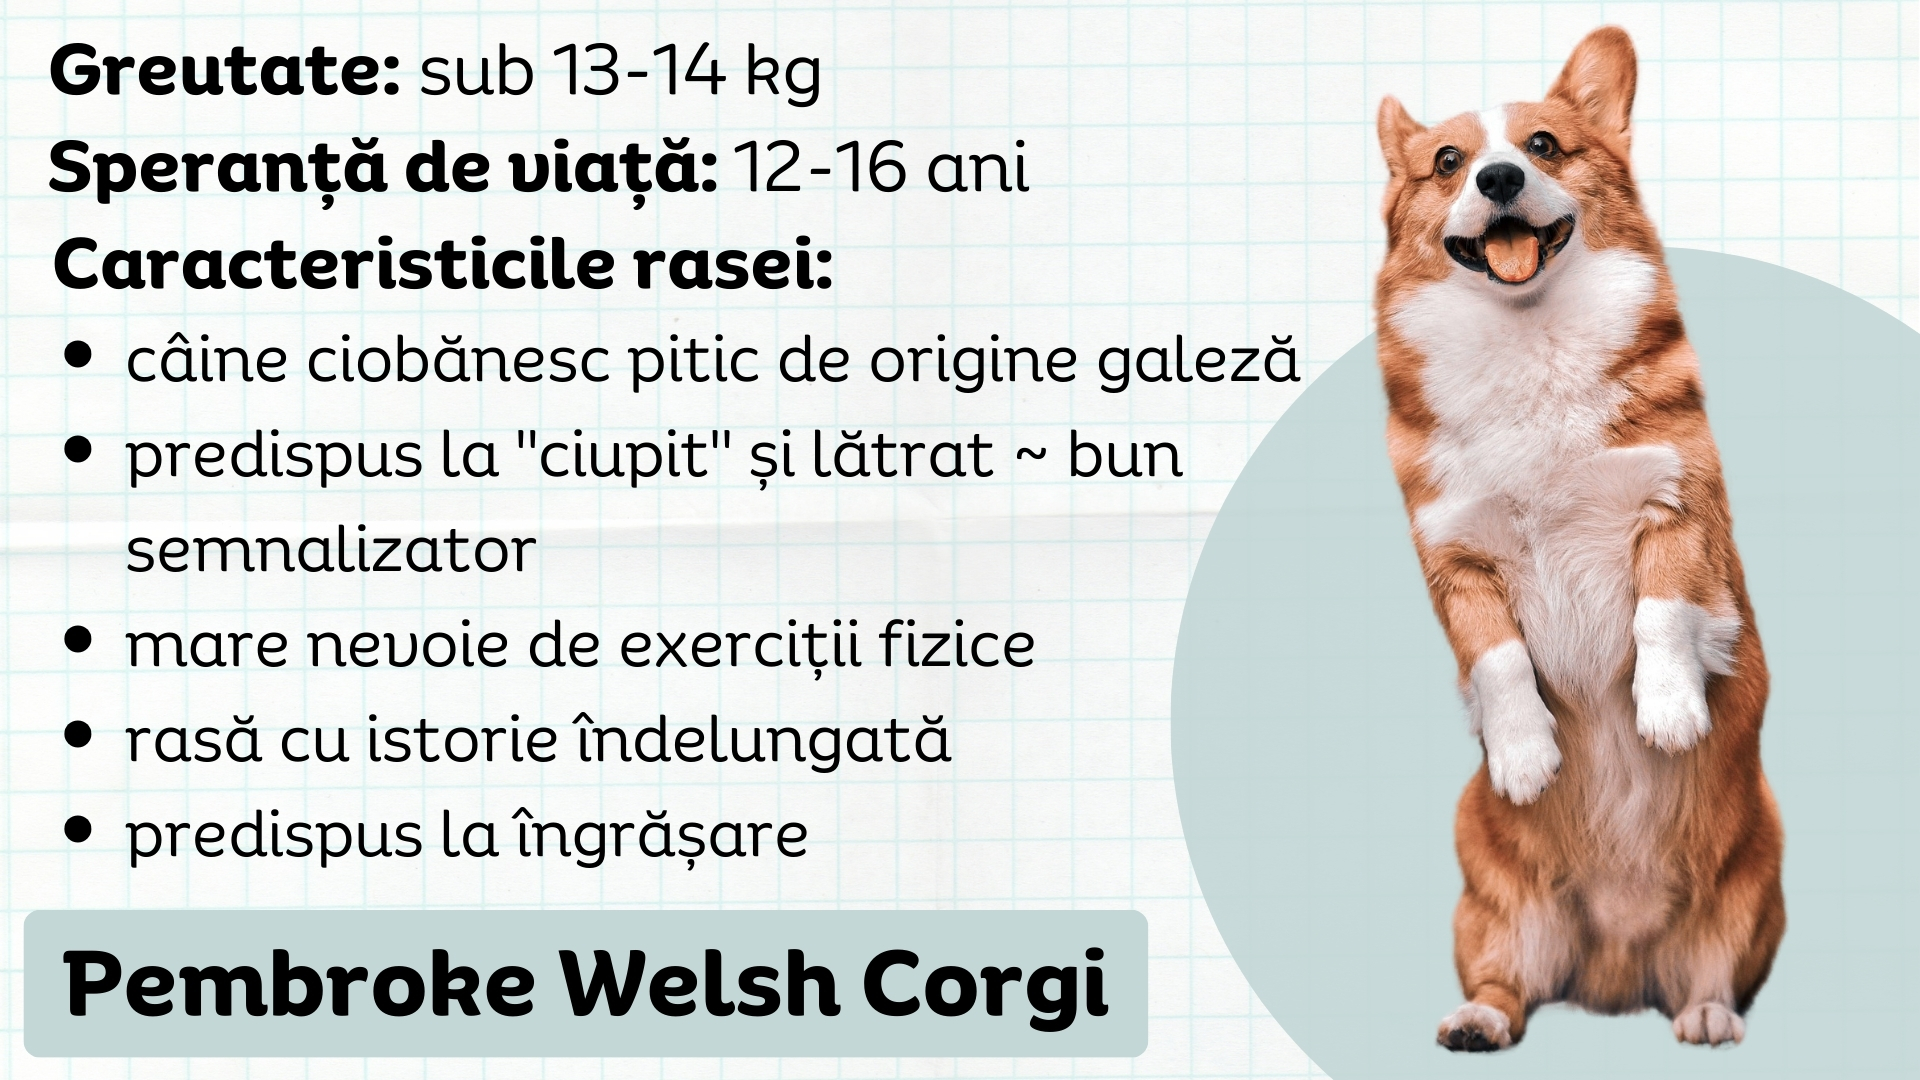 Pembroke Welsh Corgi caracteristicile rasei